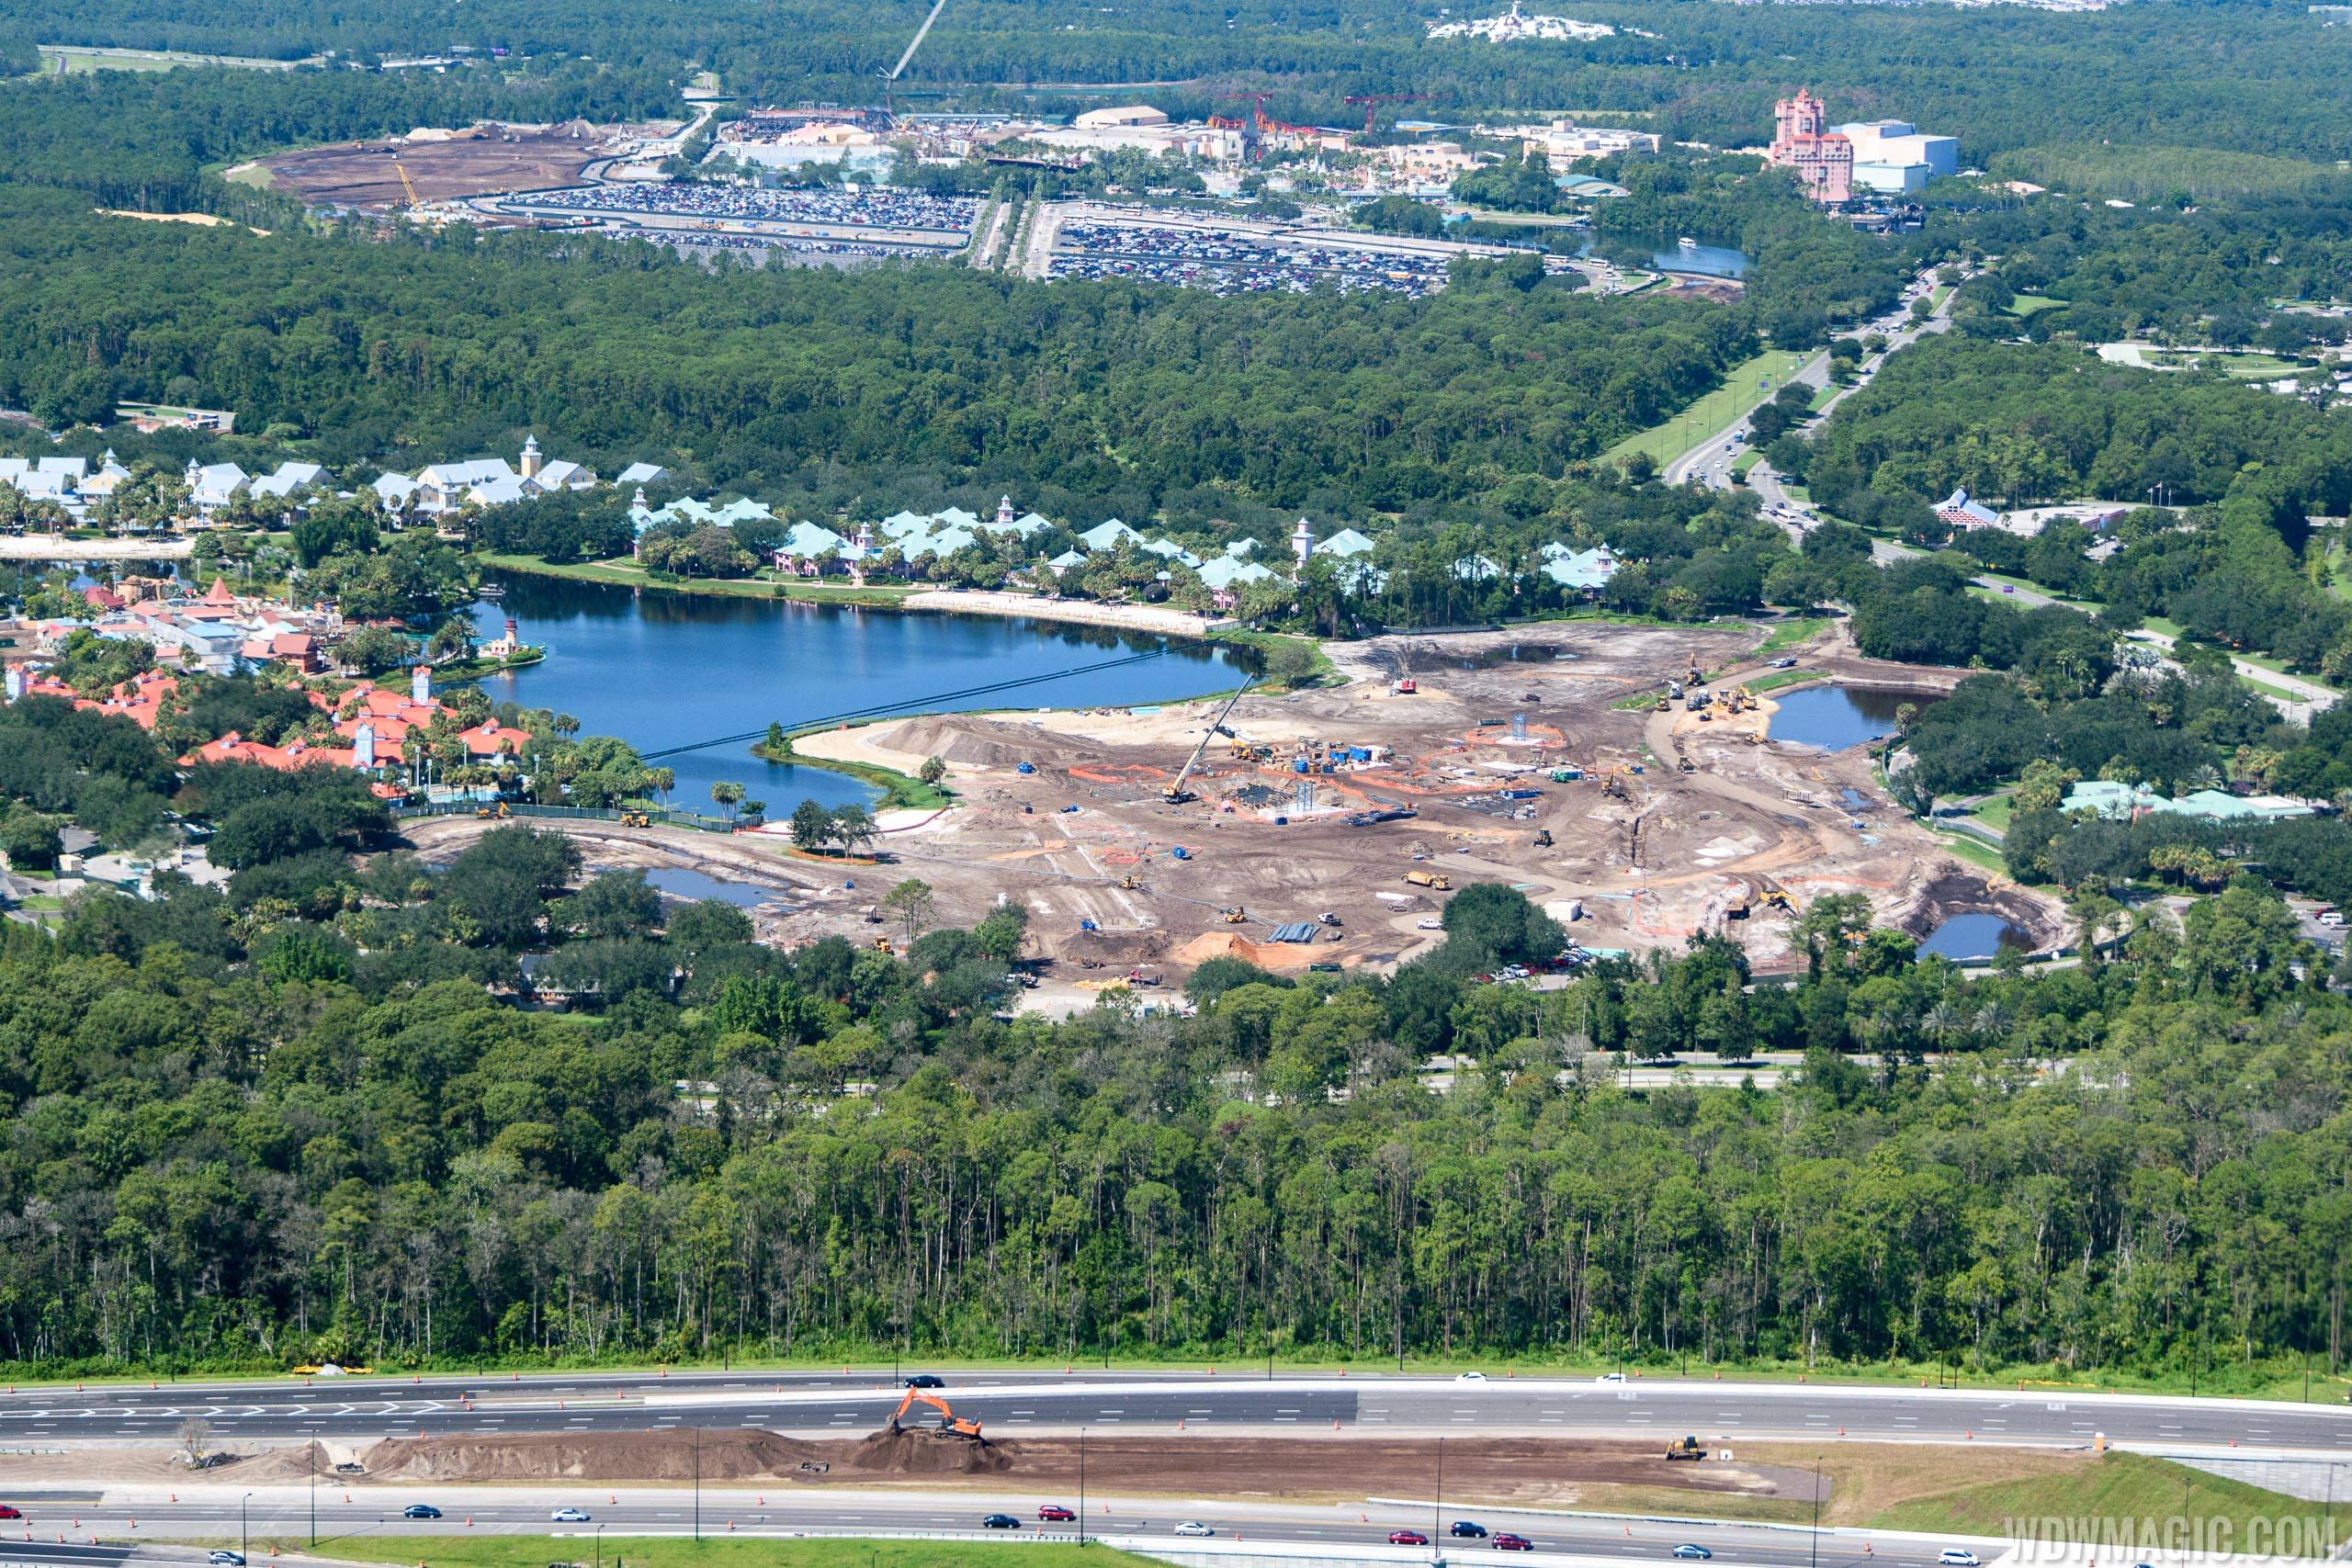 PHOTOS - Construction gets underway at Disney Riviera Resort